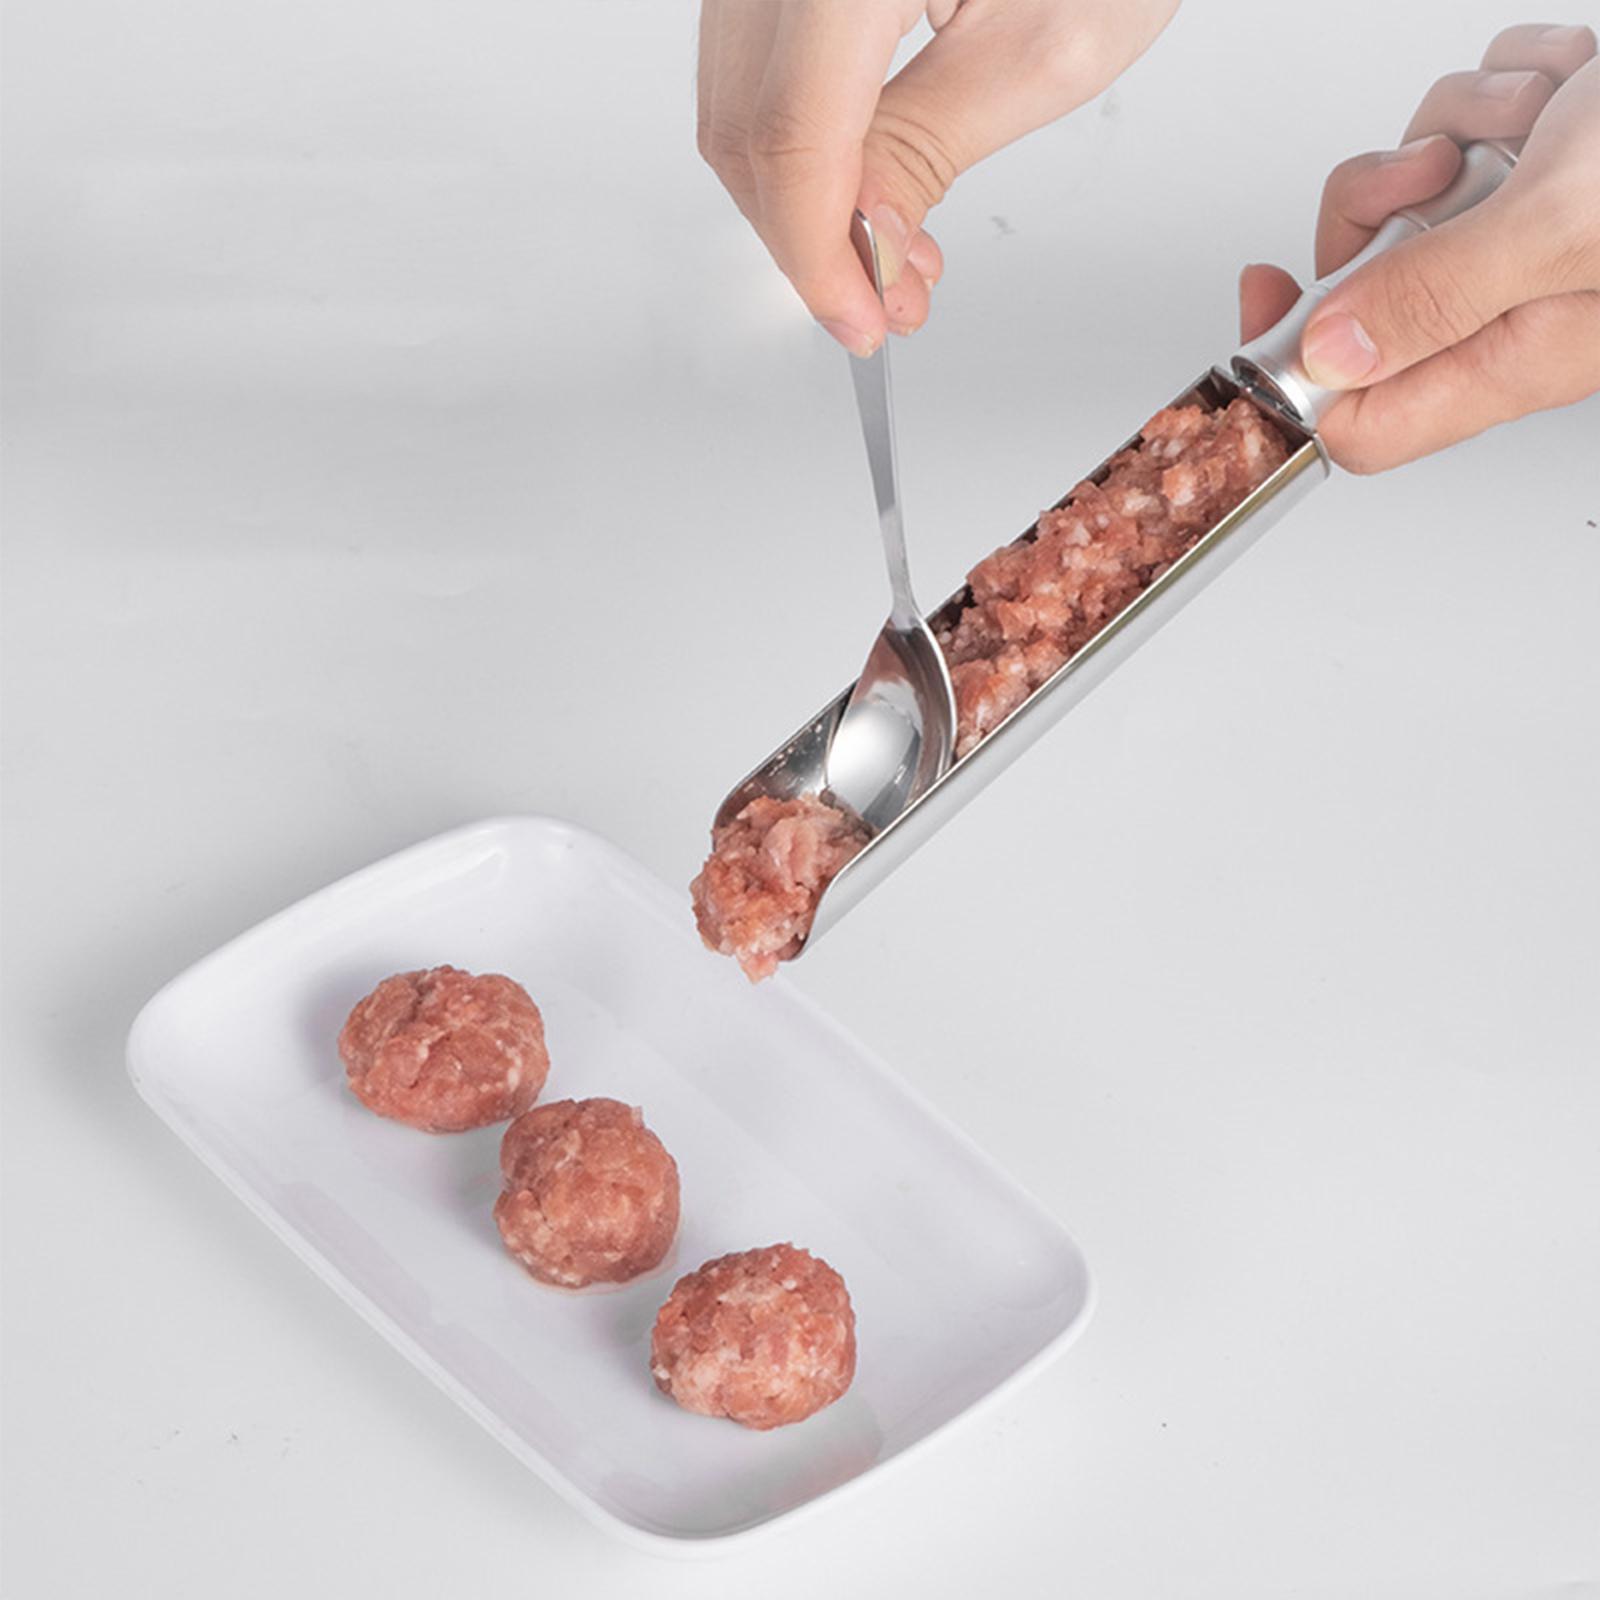 DIY Meatball Making Kitchen Meatball Maker for Rice Balls Cookie Restaurants